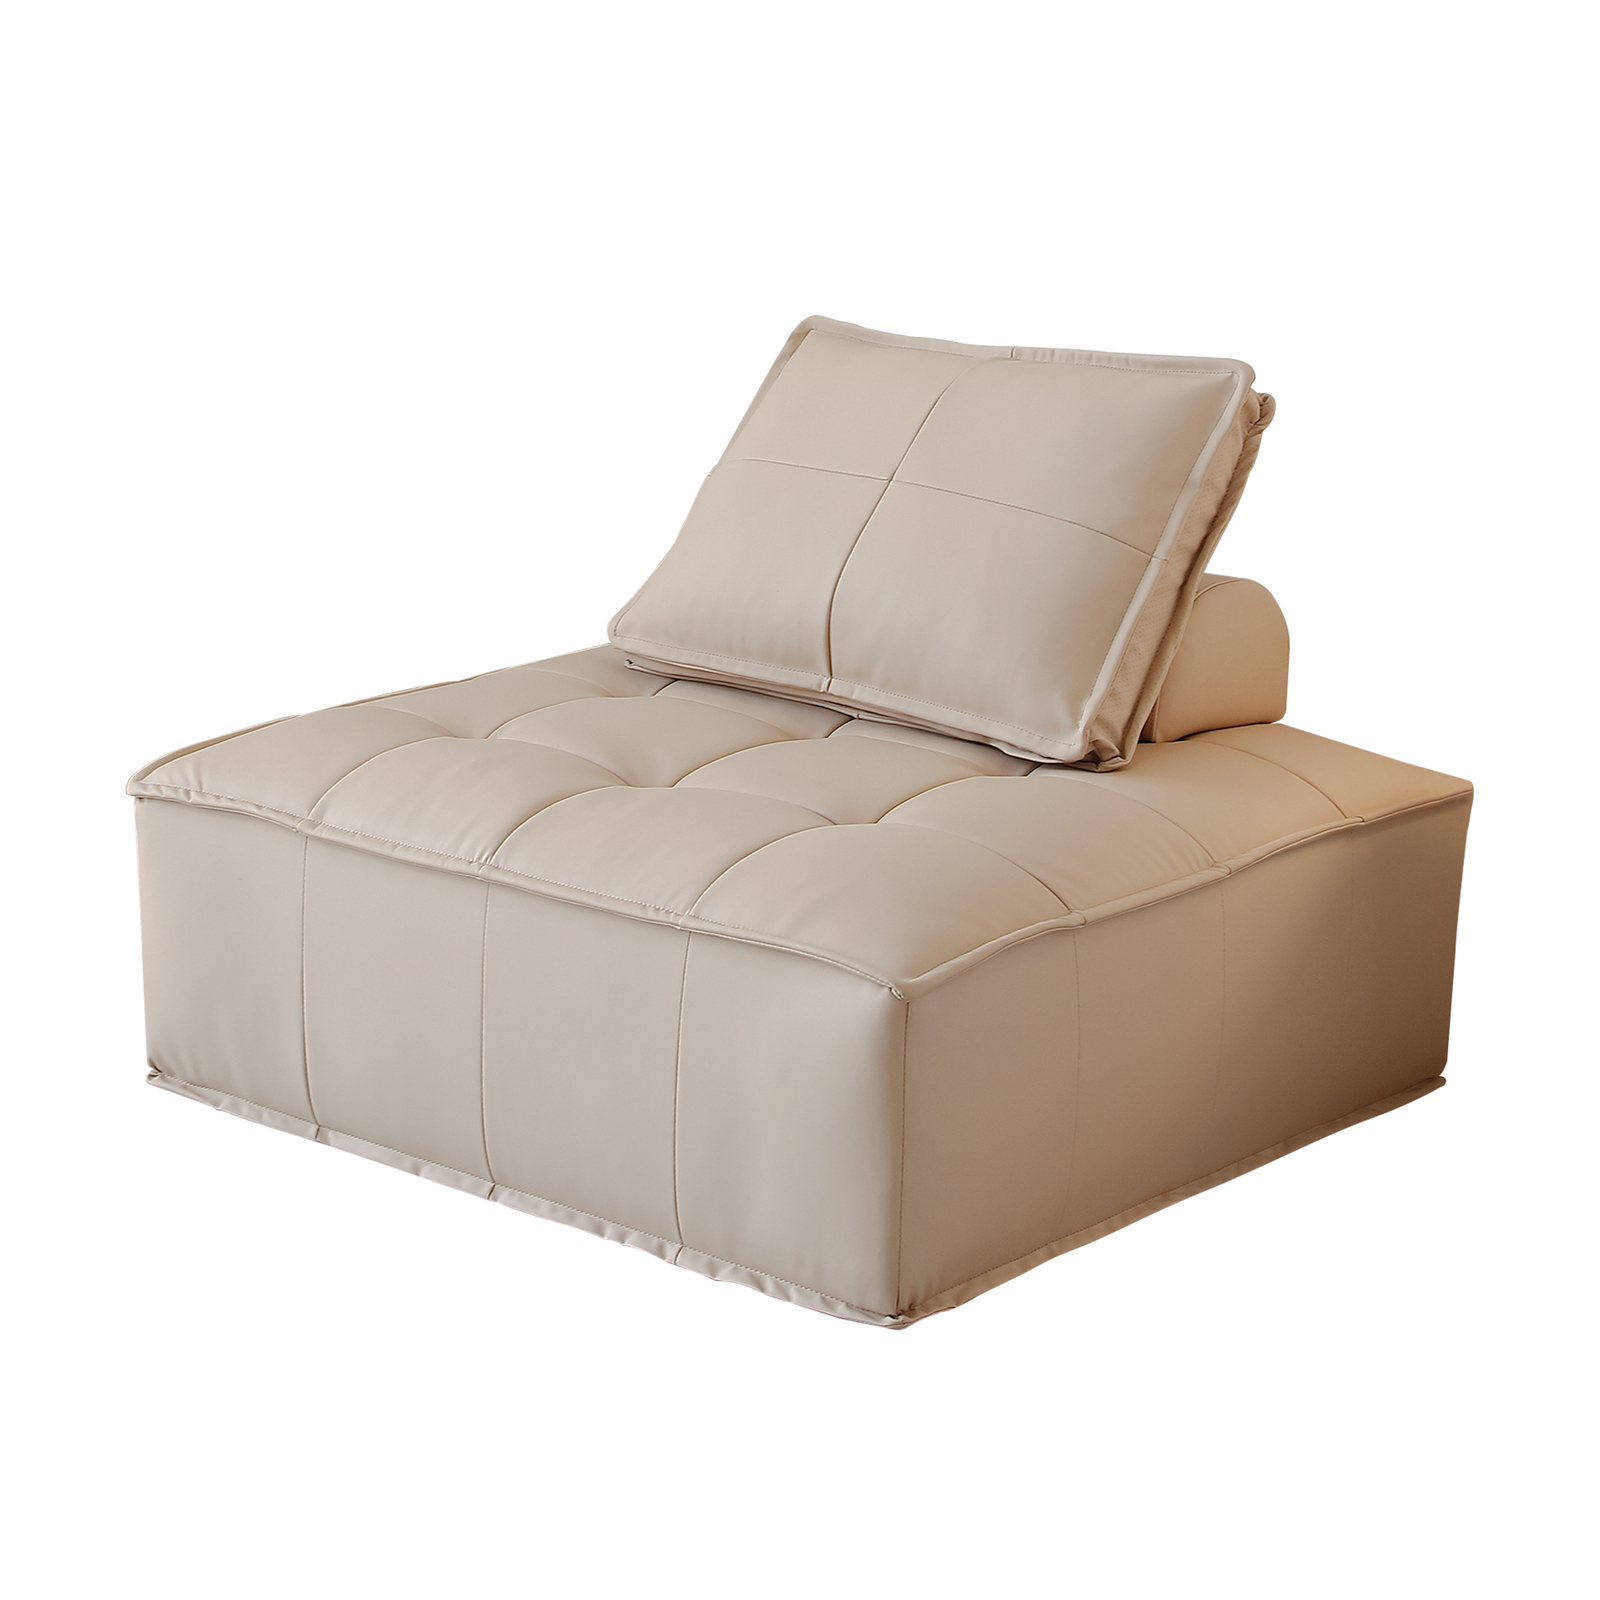 1pc Large Modular Sofa Lounge Chair Tofu Sofa Armless Seat PU Leather Couch Seat